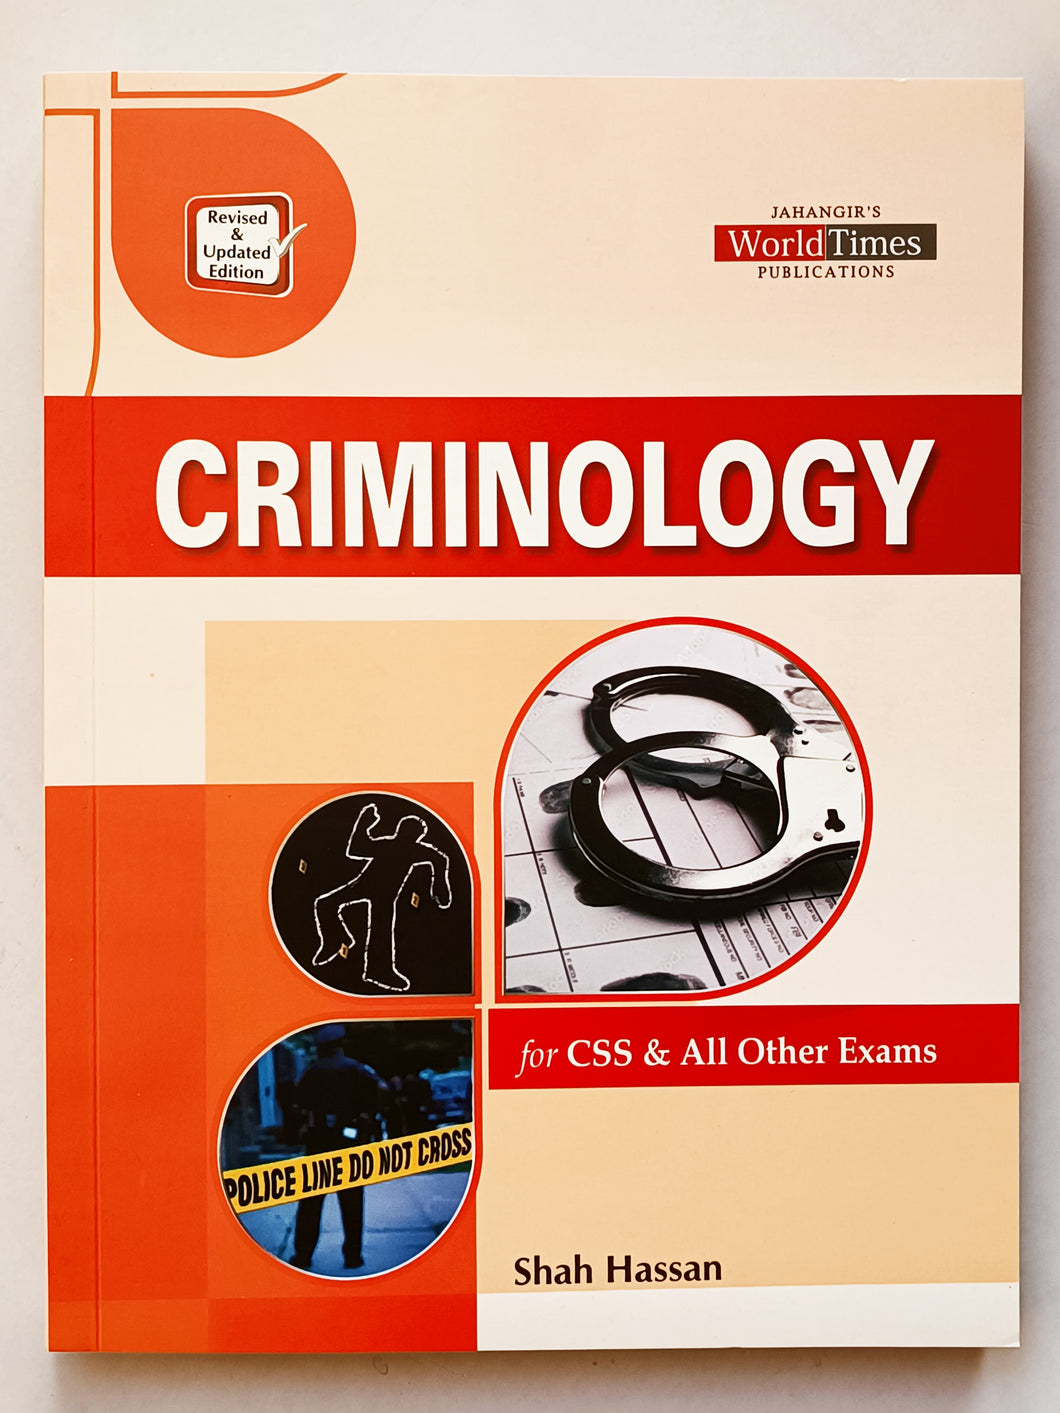 Criminology For CSS By Shah Hassan Sajid Mahmood Wattoo